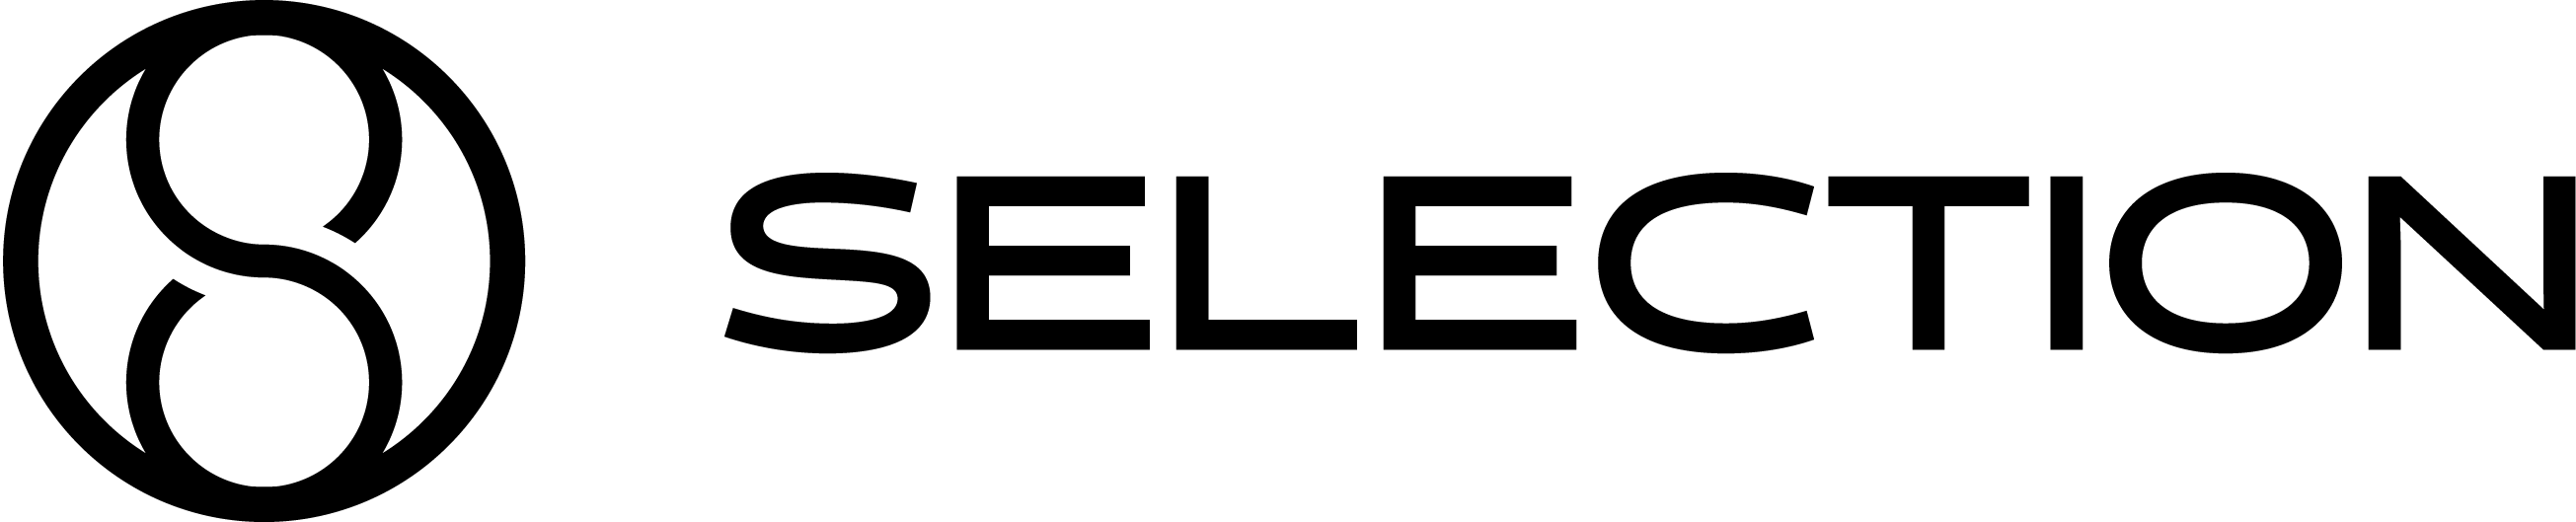 Selection logo horizontal black